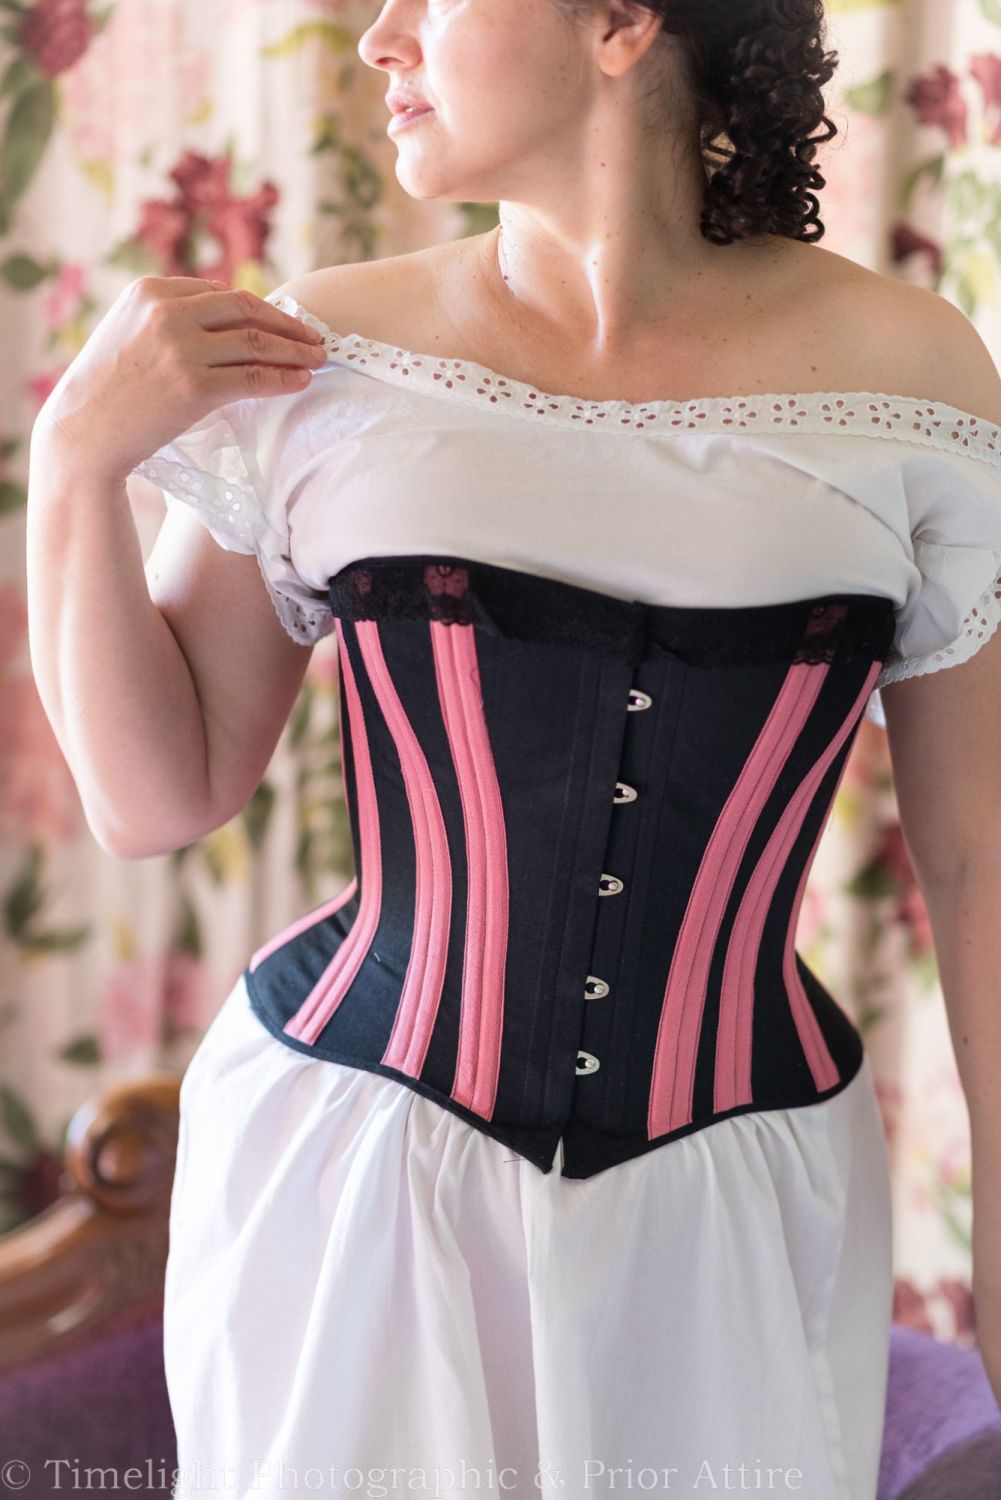 Victorian corset  27